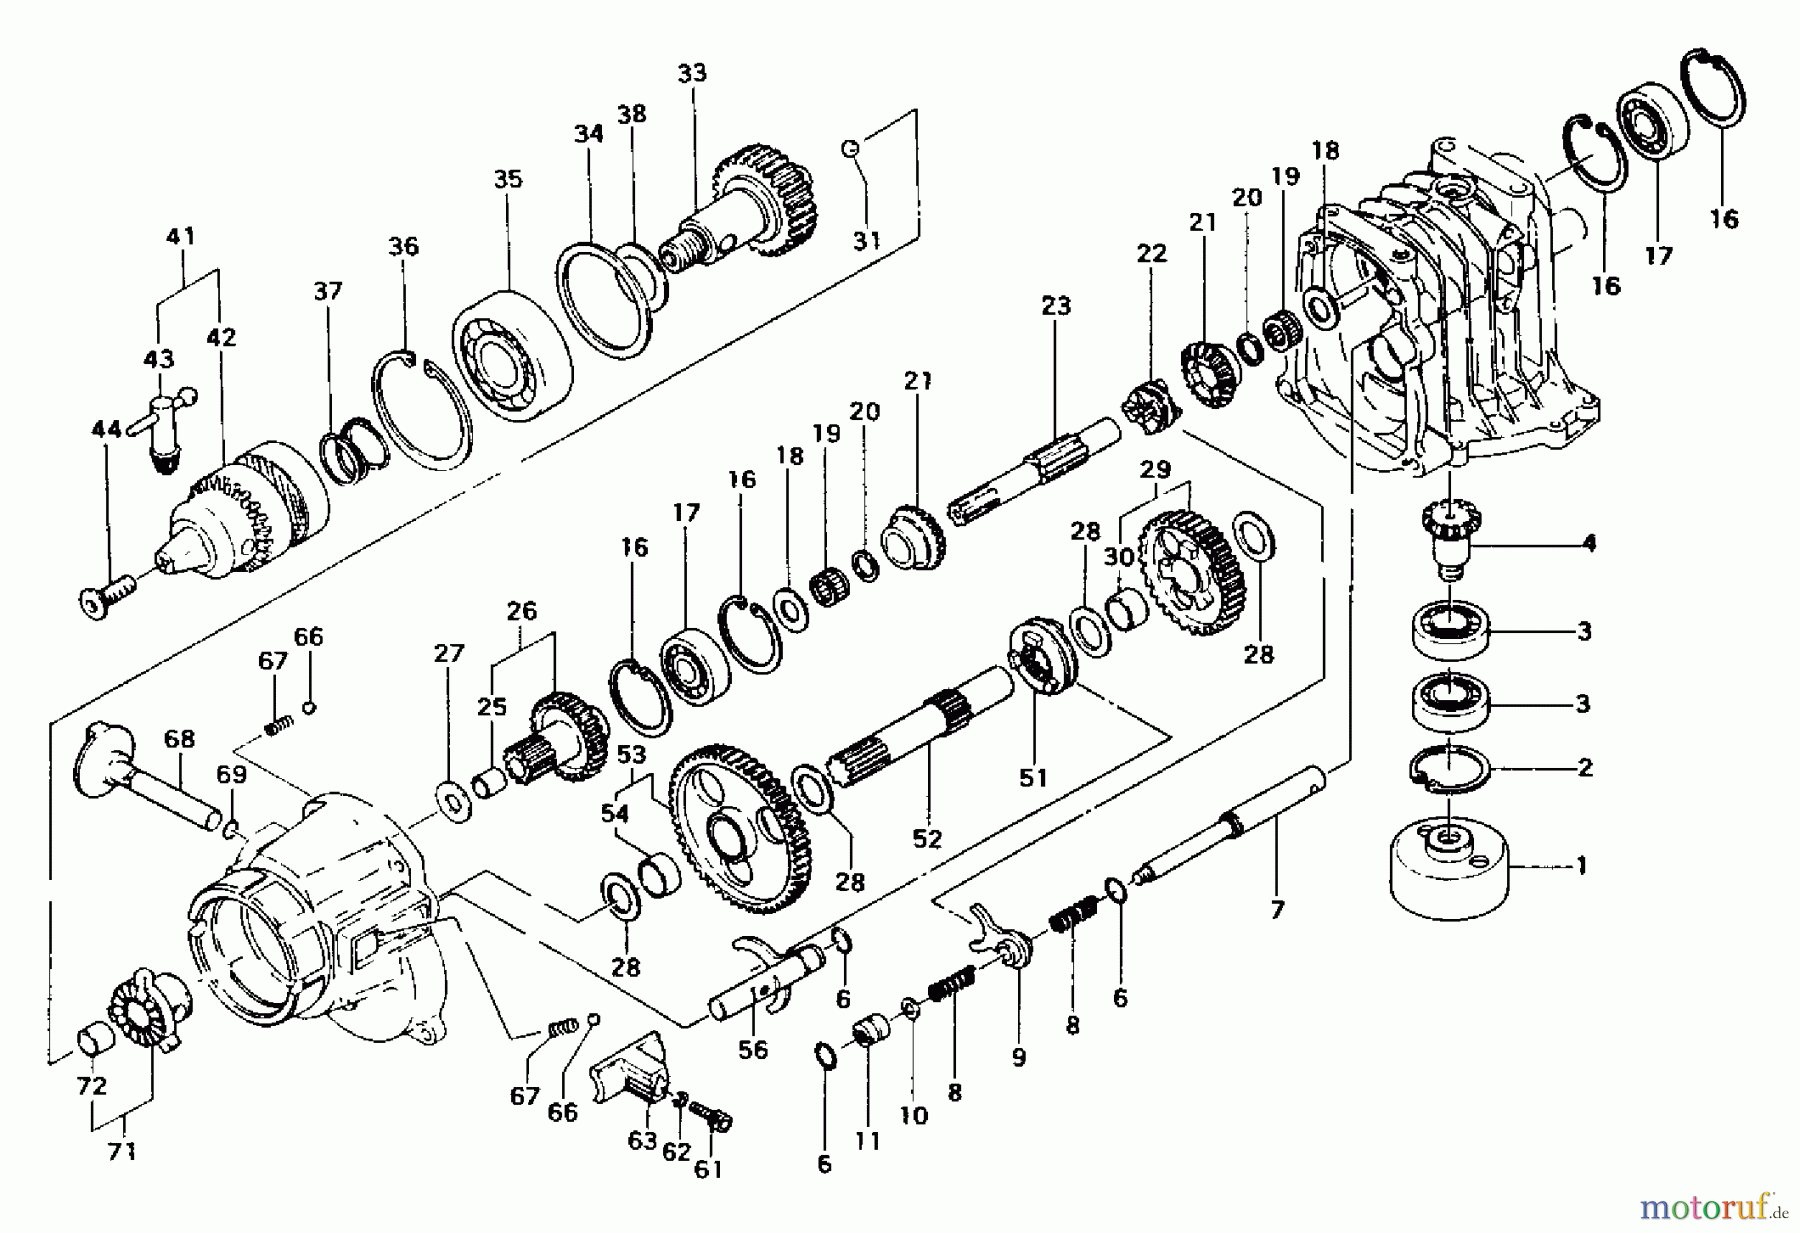  Tanaka Erdbohrer TED-265 - Tanaka Engine Drill Transmission